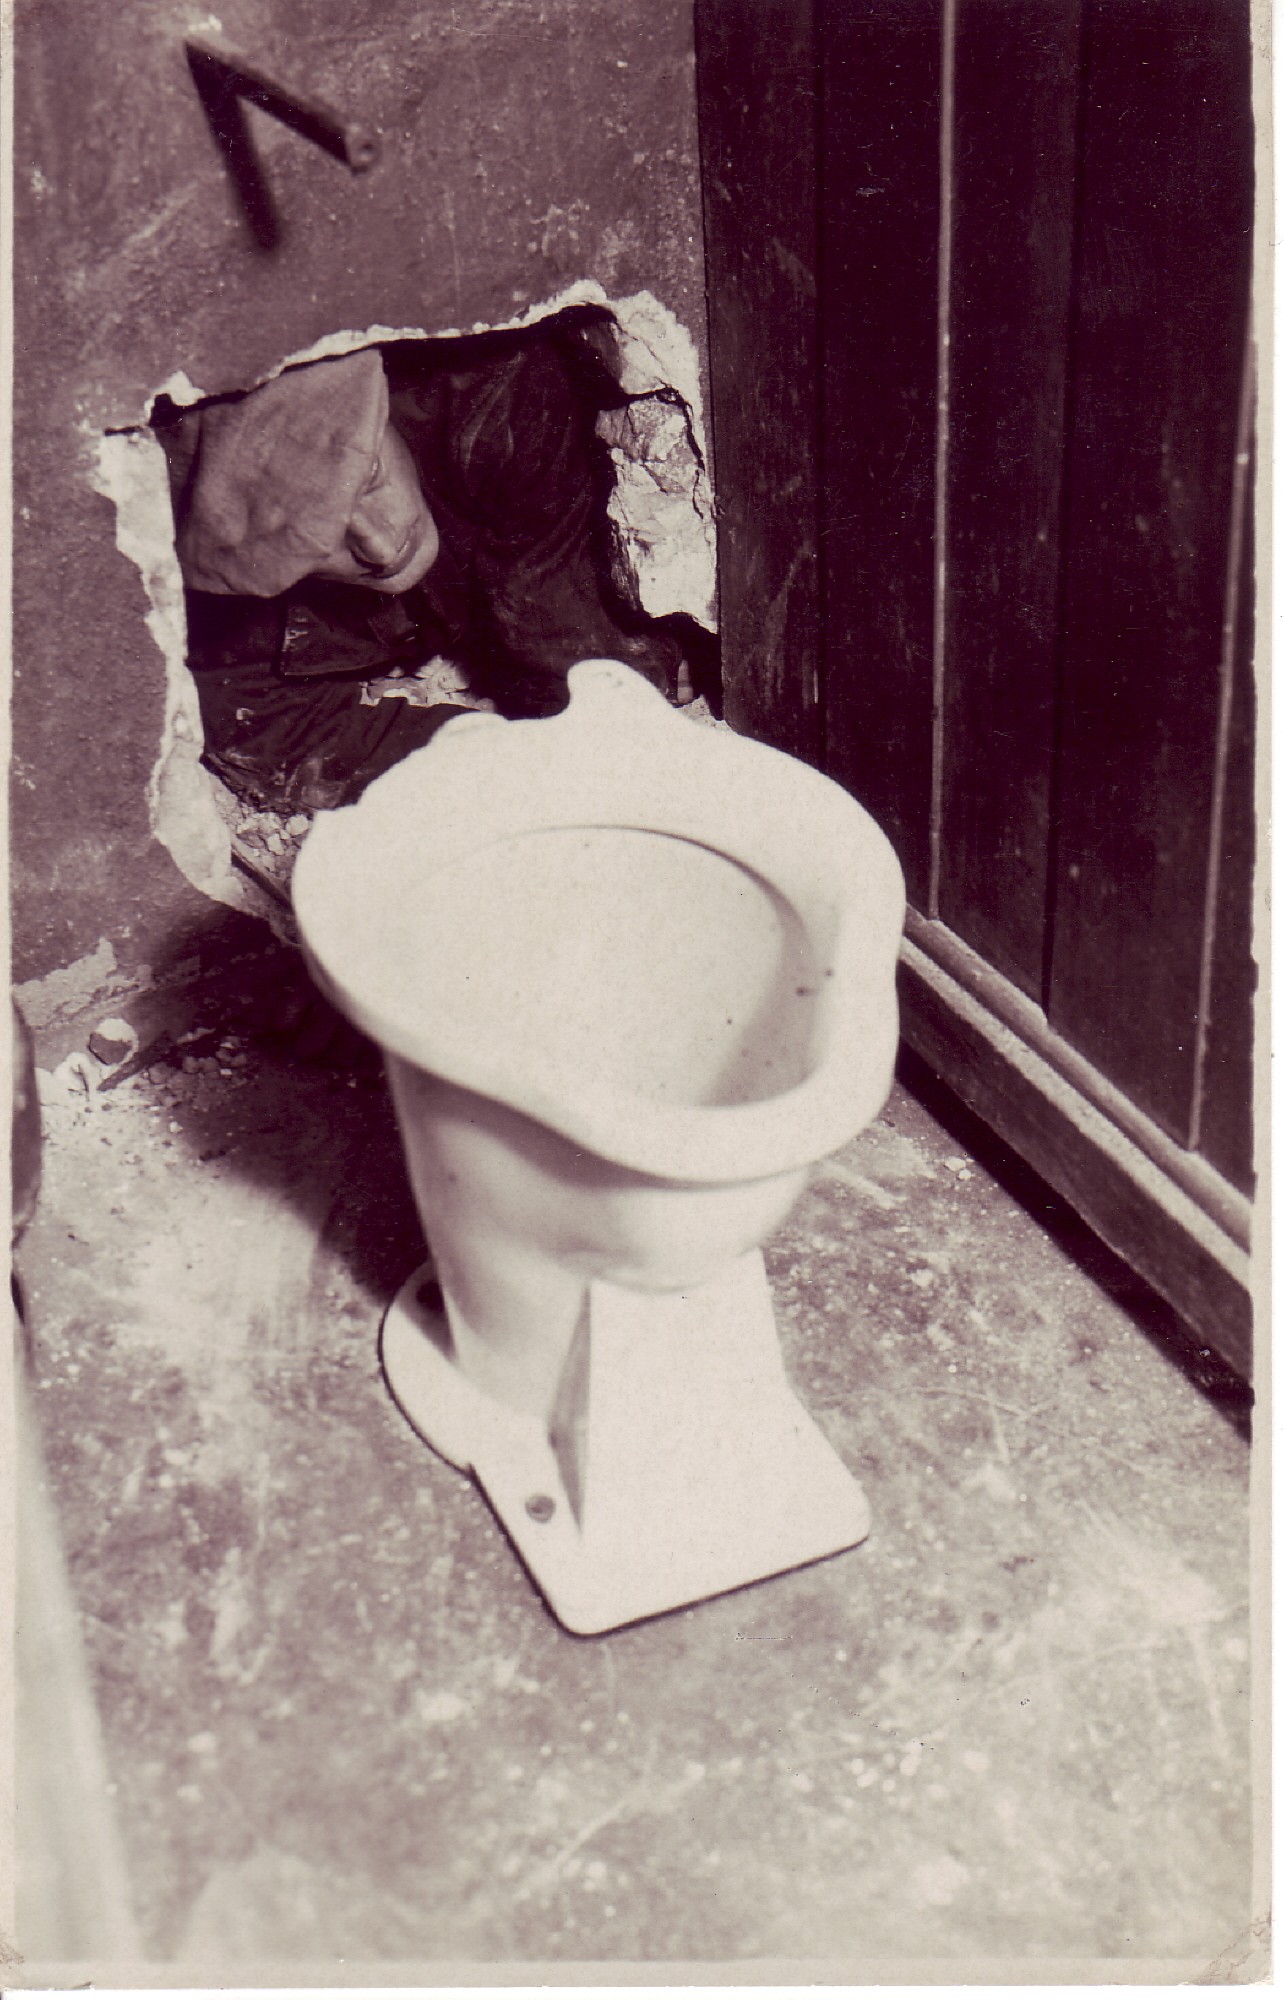 Peter Allan bei der Nachstellung der "Toilettenflucht" (SBG gGmbH CC BY-NC-SA)